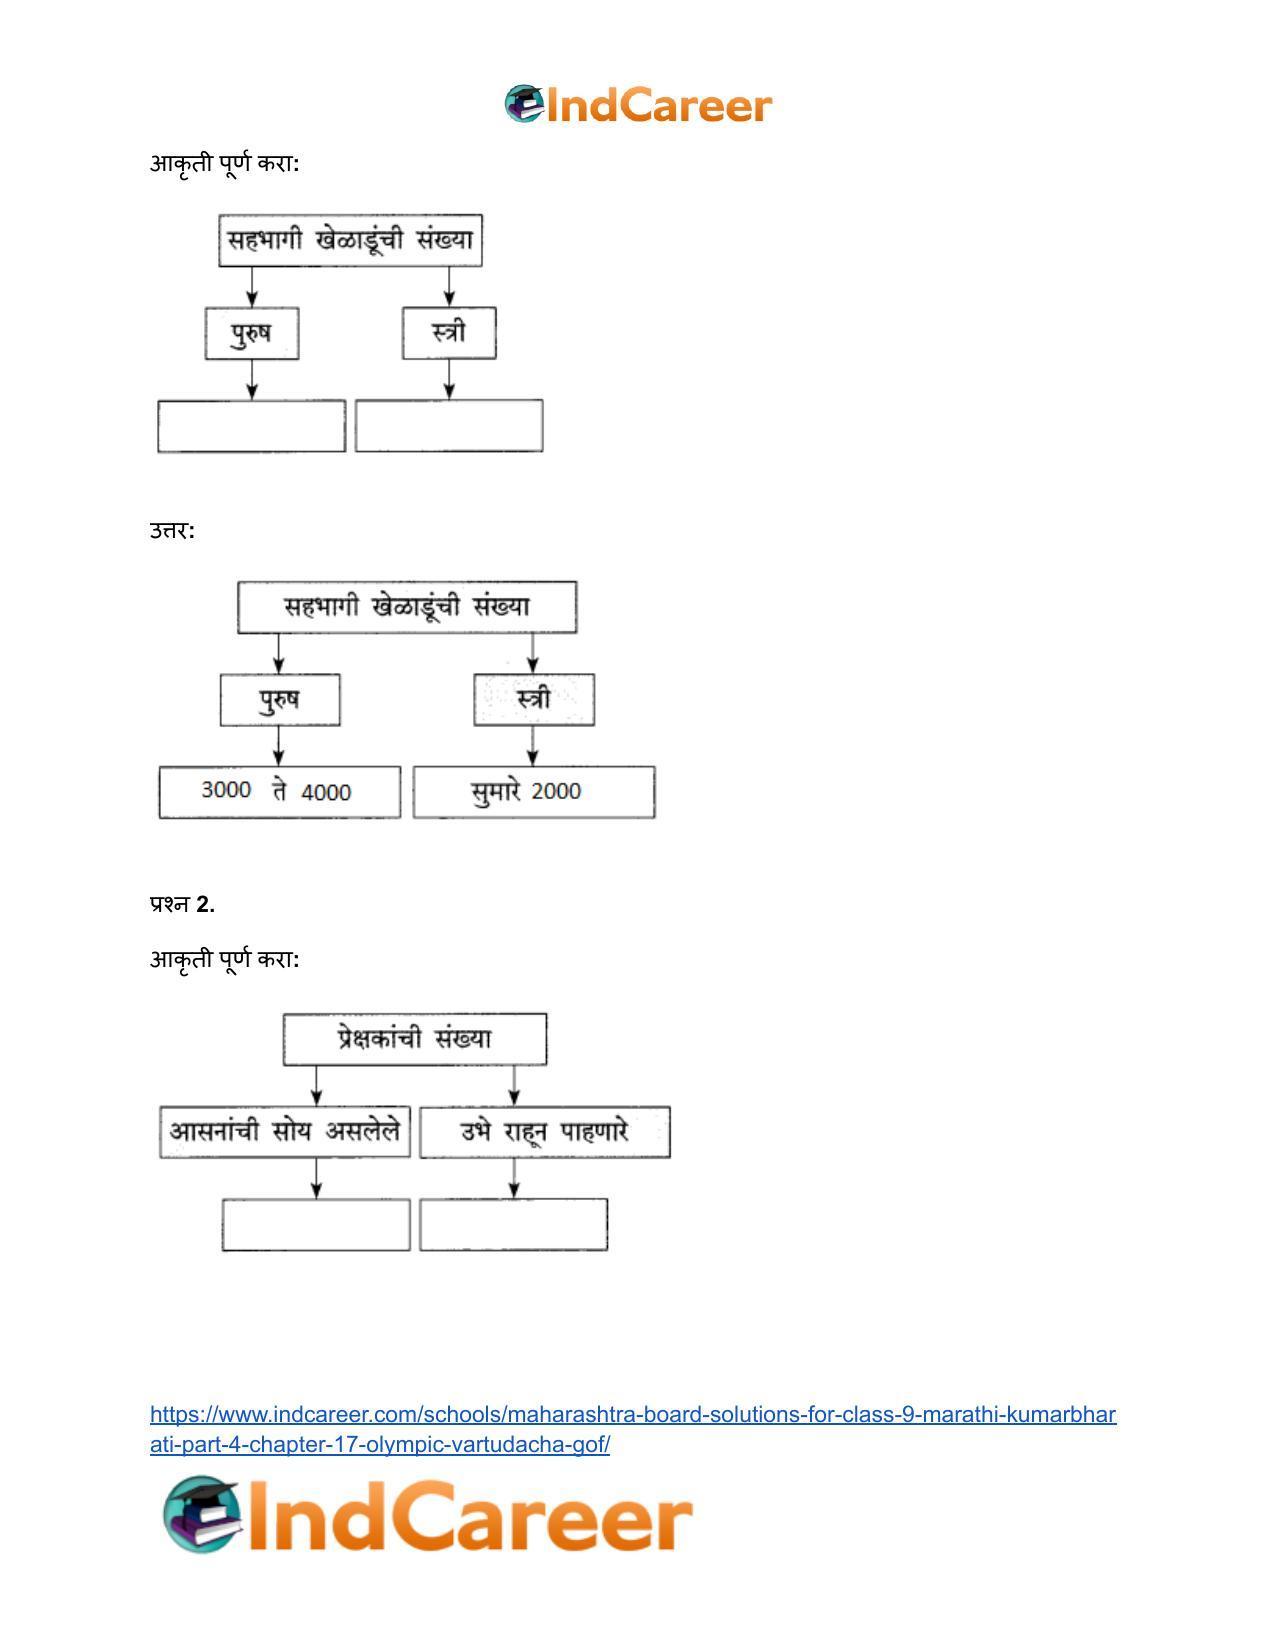 Maharashtra Board Solutions for Class 9- Marathi Kumarbharati (Part- 4): Chapter 17- ऑलिंपिक वर्तुळांचा गोफ - Page 11